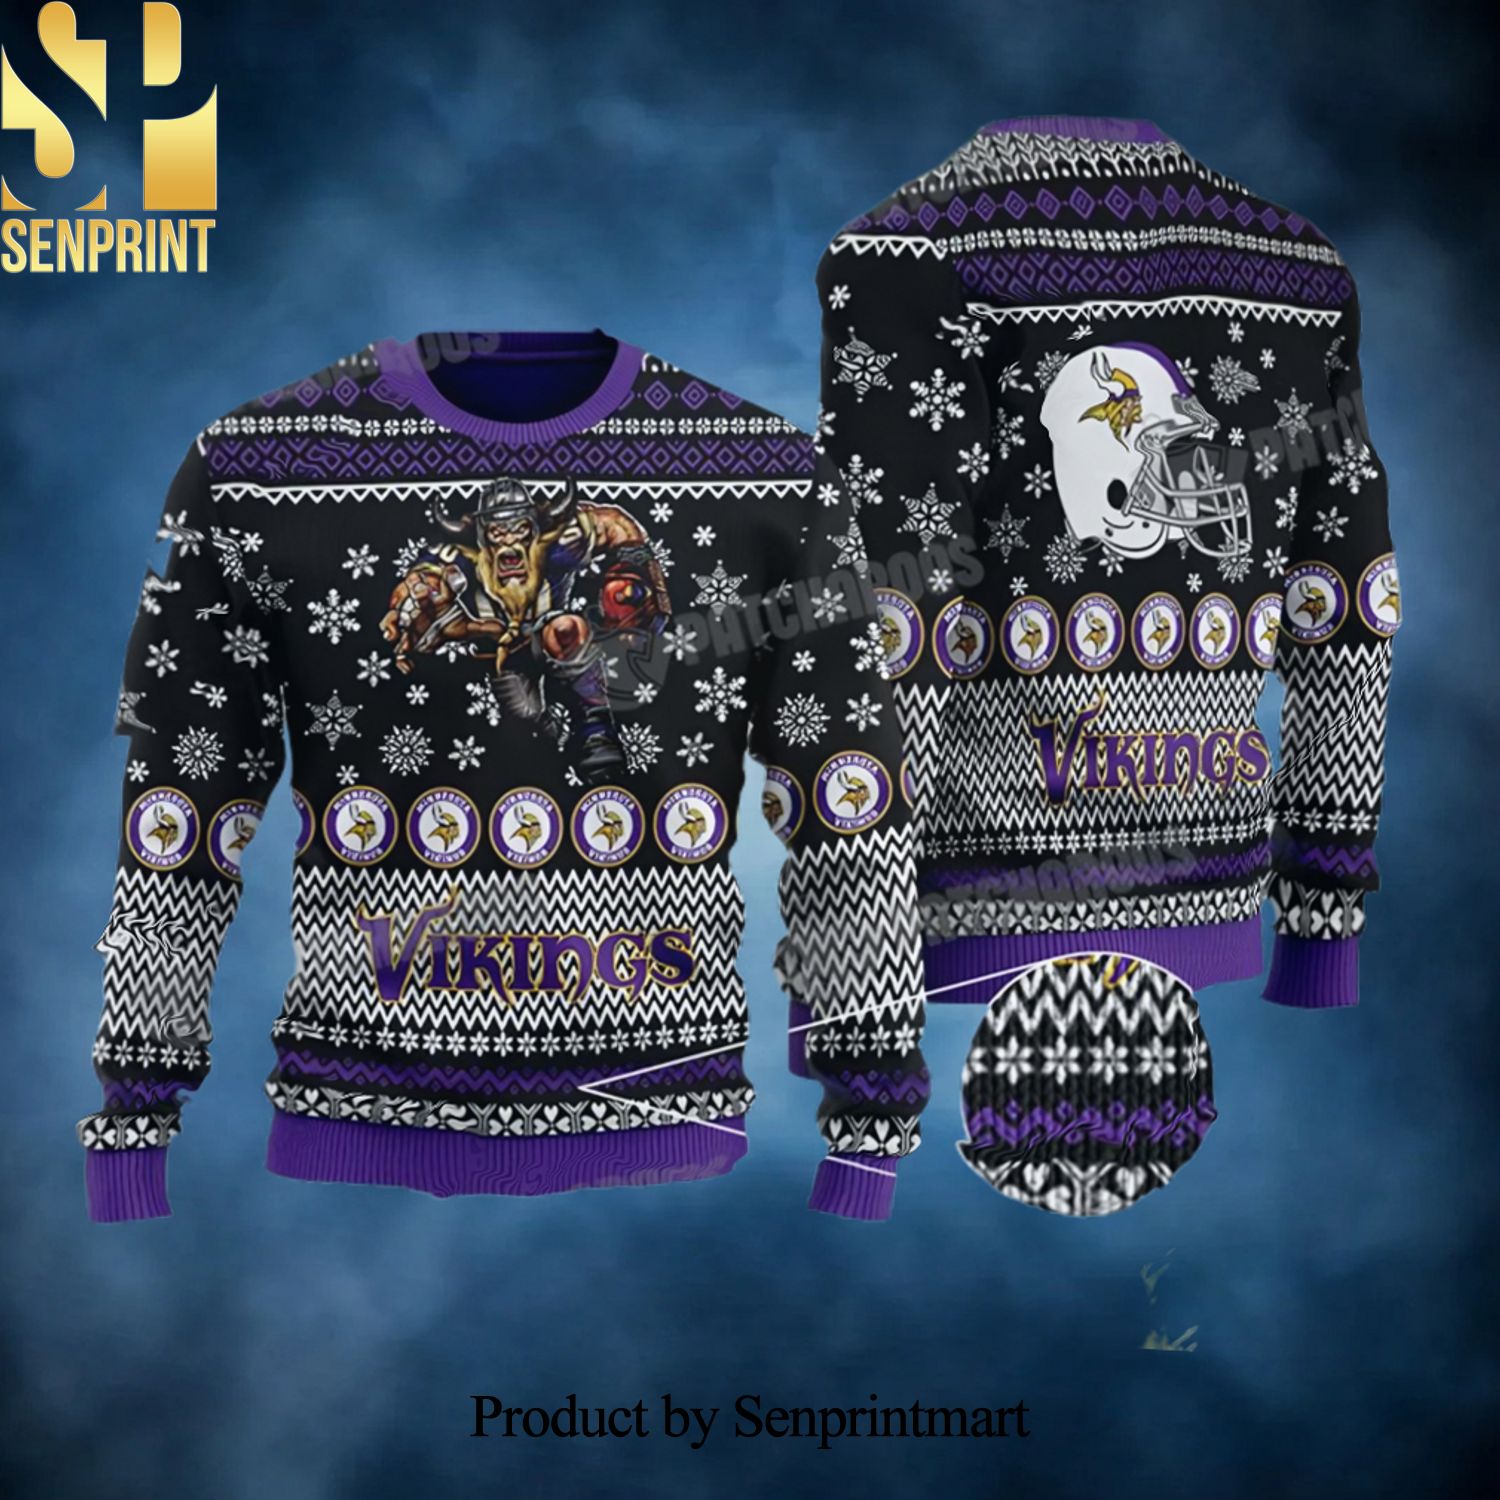 Minnesota Vikings 3D NFL Football Fan Gift 3D Printed Ugly Christmas Sweater